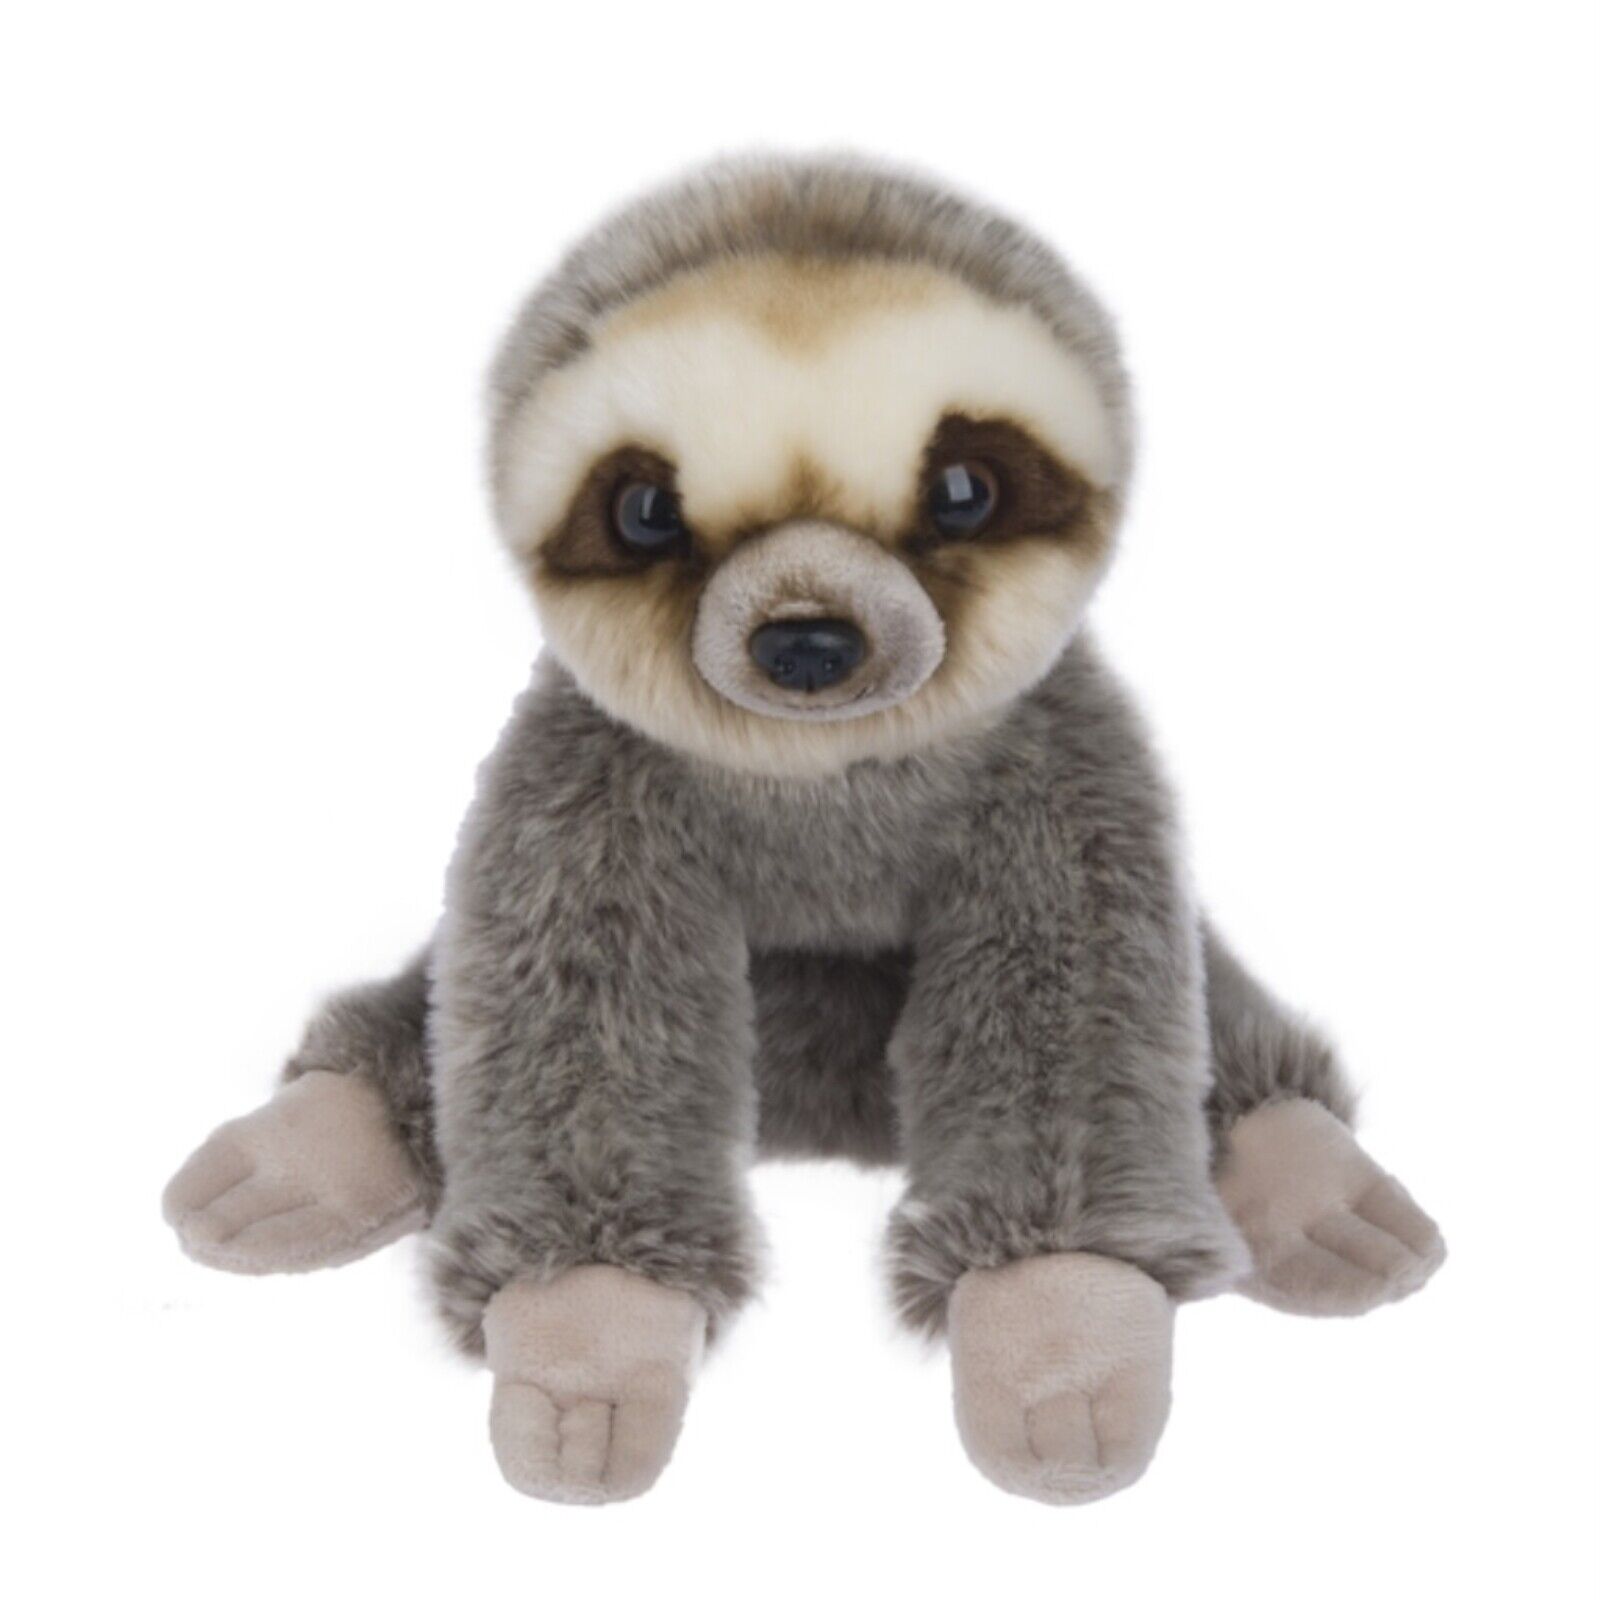 Ganz The Heritage Collection Grey Sloth Animal Plush Stuffed Animal 12 Inch